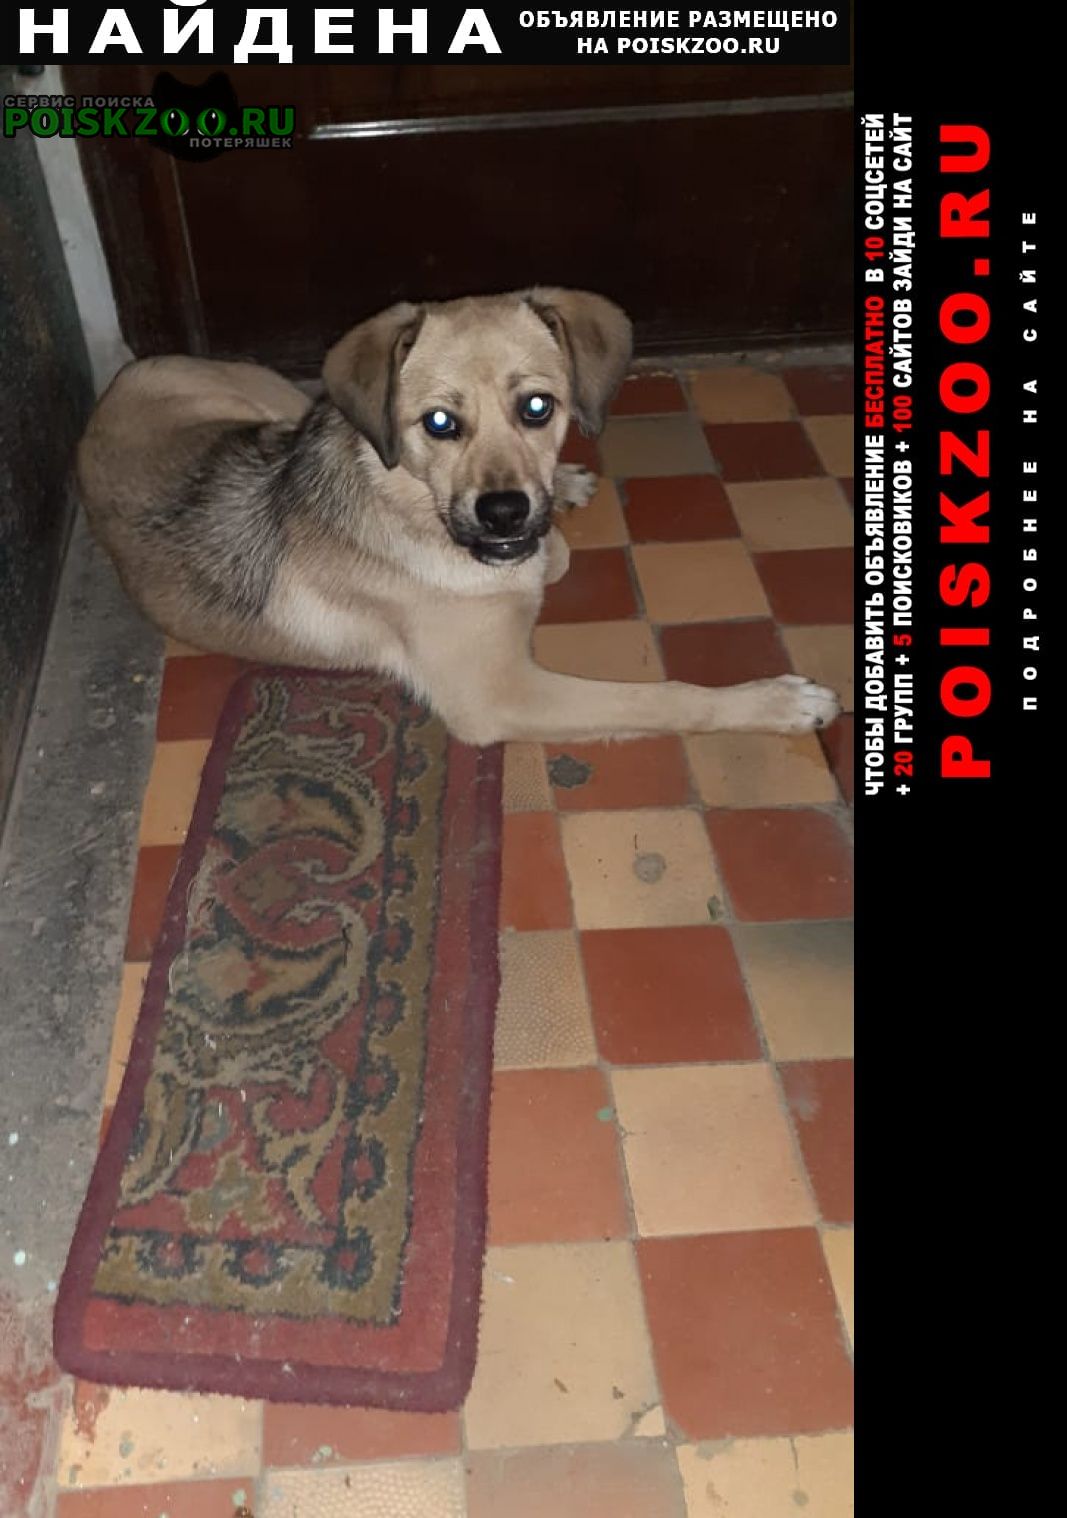 Найдена собака кобель, потерялась Краснодар